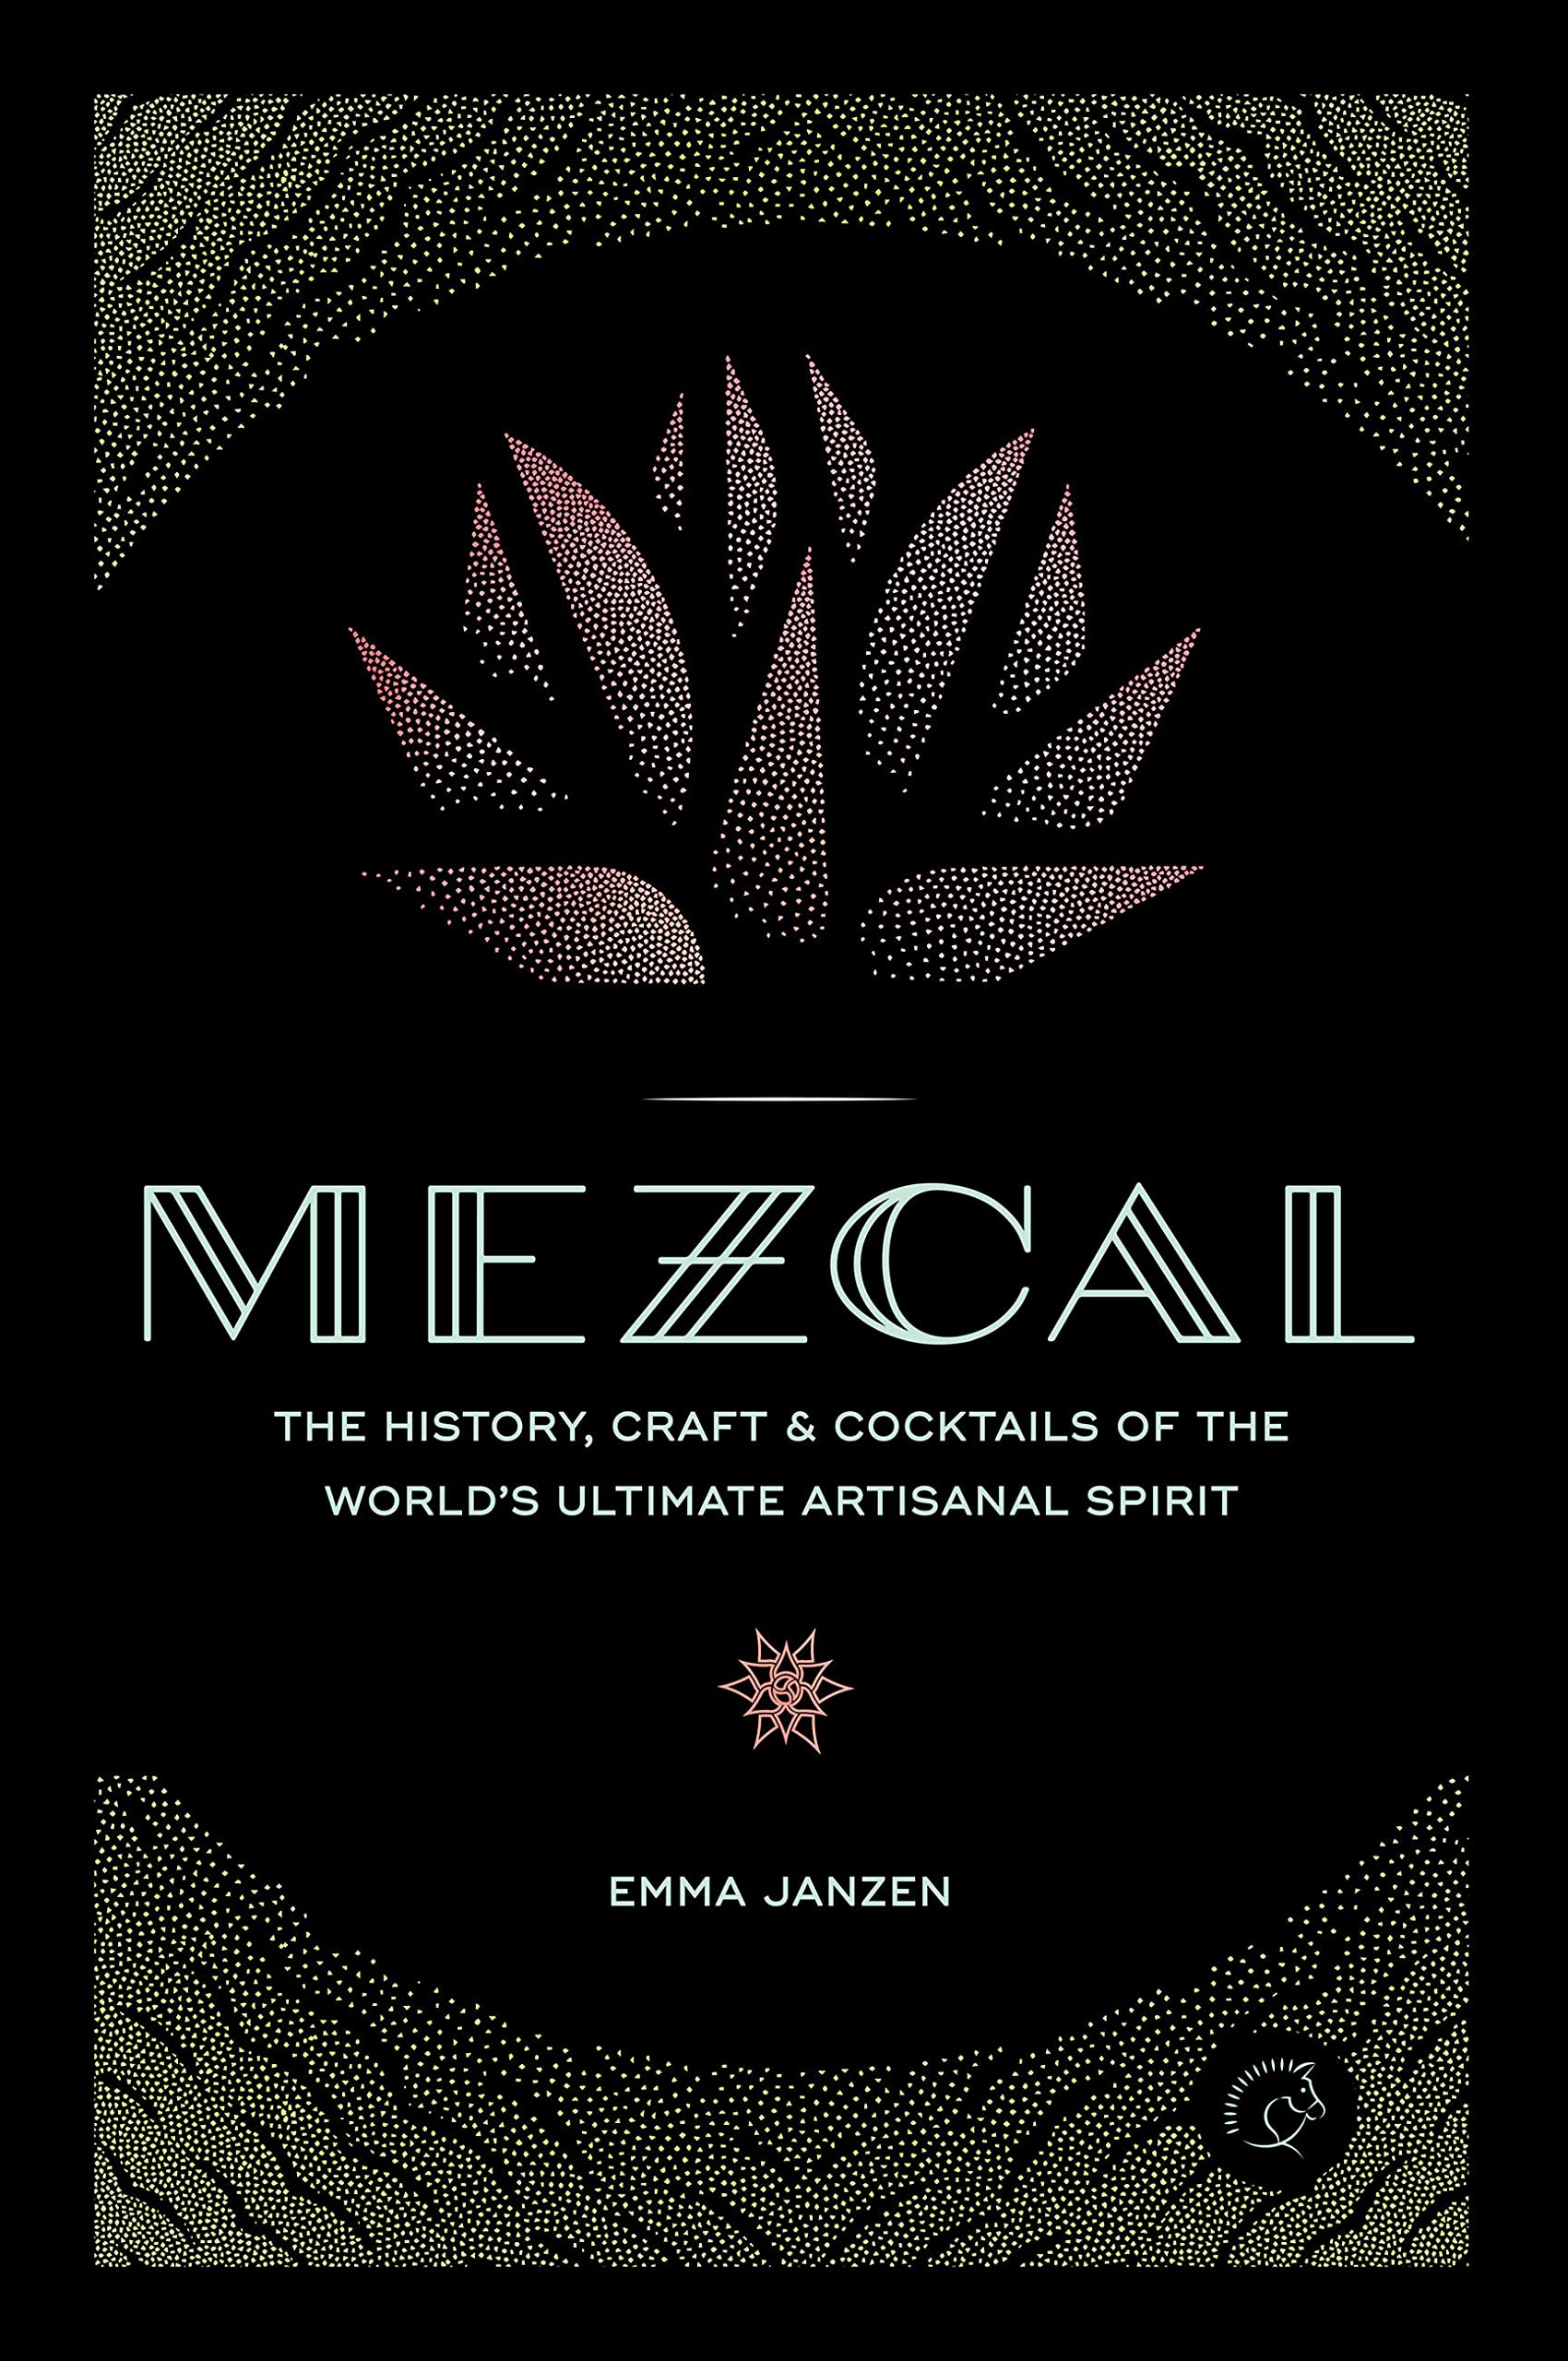 Mezcal: The History, Craft & Cocktails of the World’s Ultimate Artisanal Spirit (Emma Janzen)